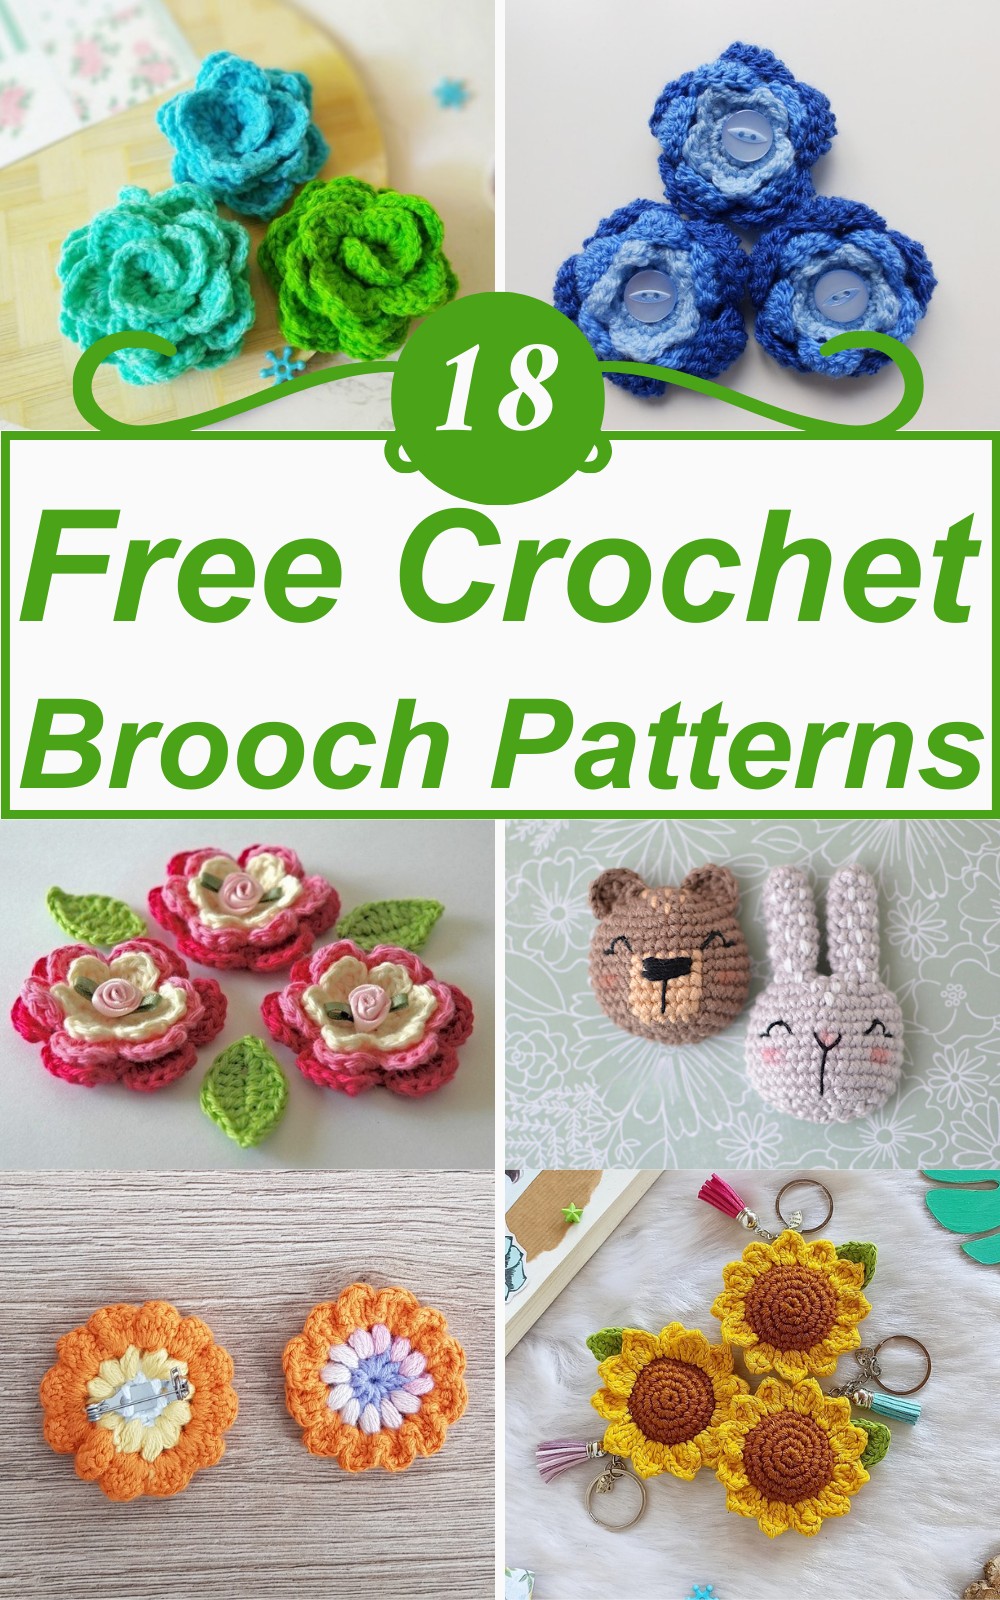 3 Free Crochet Brooch Patterns